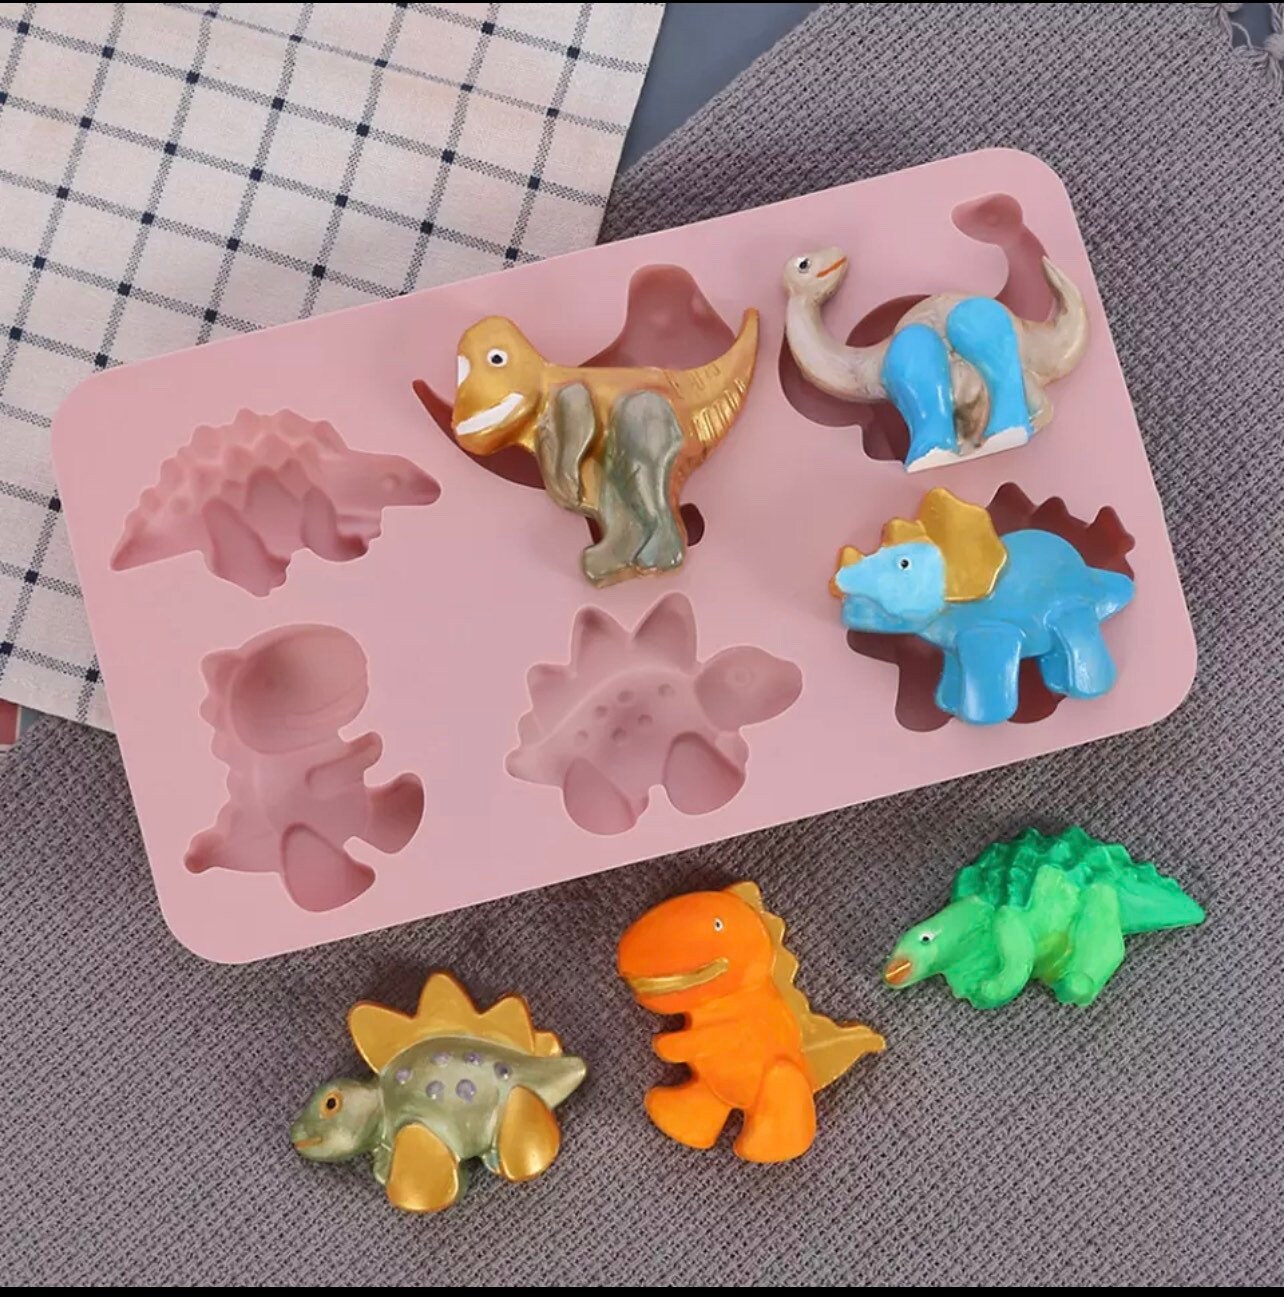 3D Dinosaur Silicone Molds Fondant Cake Chocolate Baking Decoration DIY  Crafts